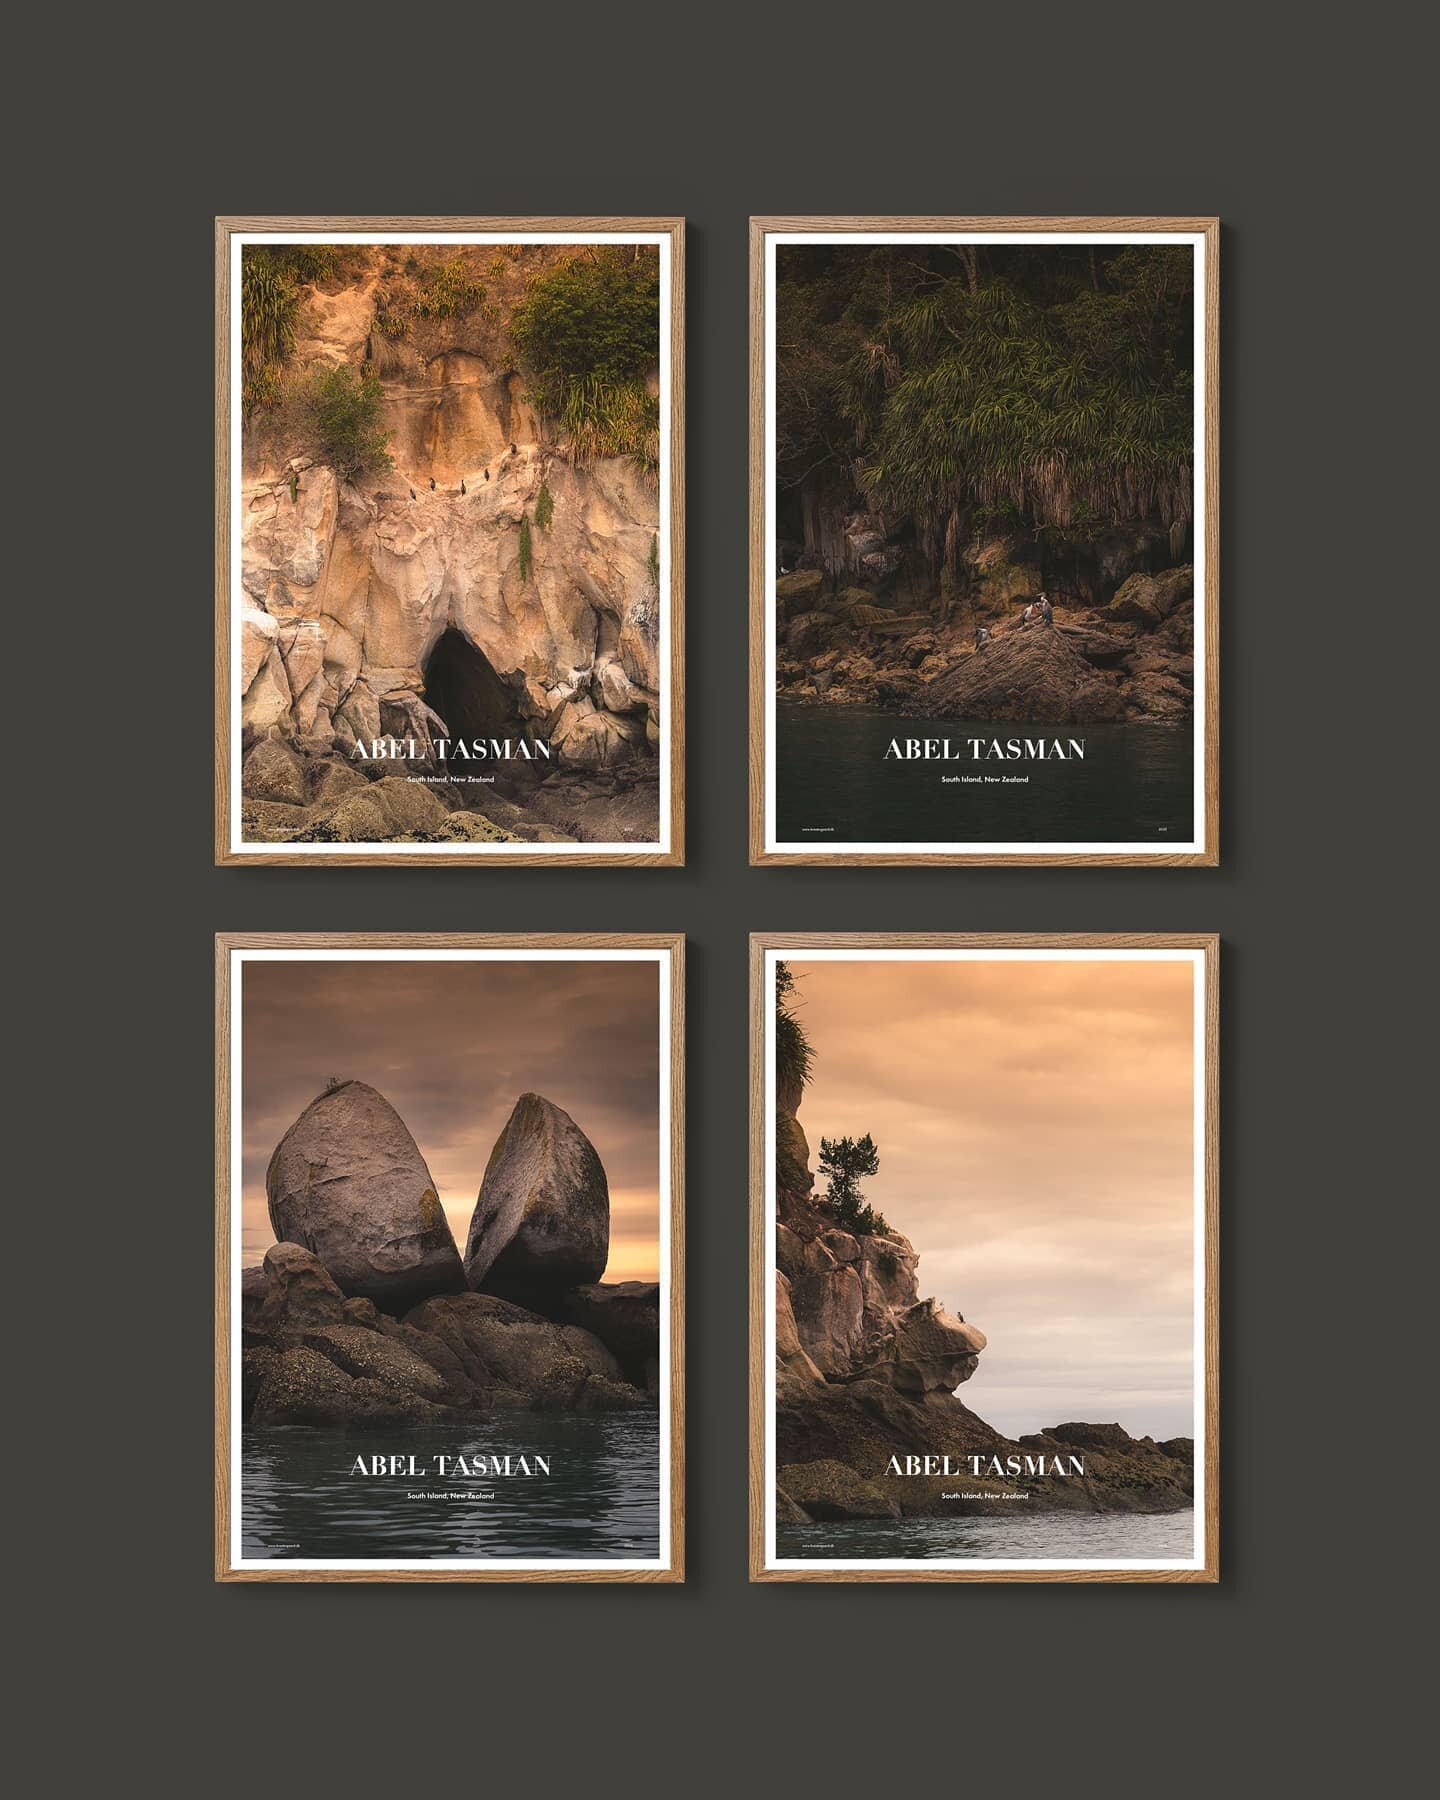 New poster concept on the making. Photos taken in beautiful Abel Tasman.
.
.
.
.
#newzealand #nz #travel #photooftheday #nature #nzmustdo #photography #adventure #laketaupo #travelphotography  #purenewzealand #outdoor #travelgram #taupo #explore #kiw